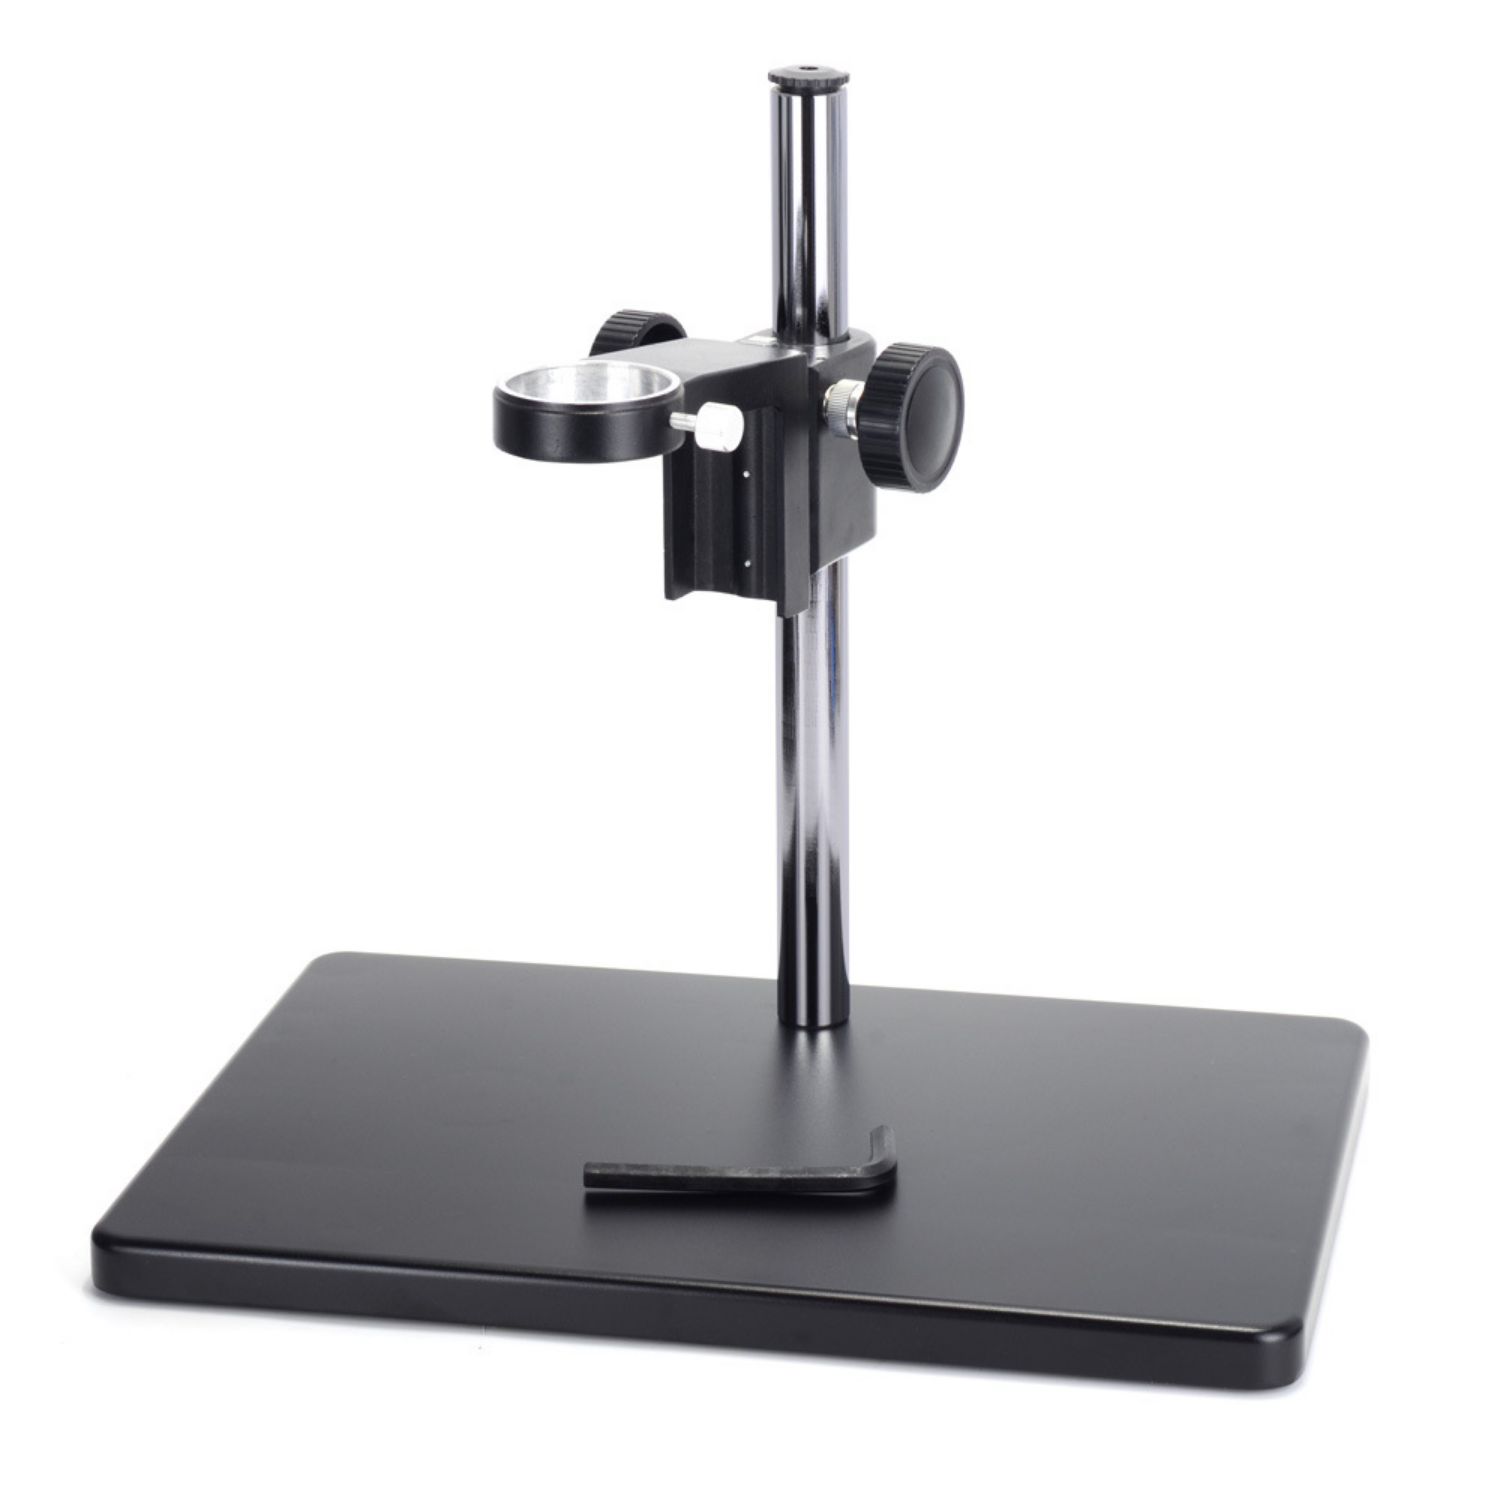 measuring microscope